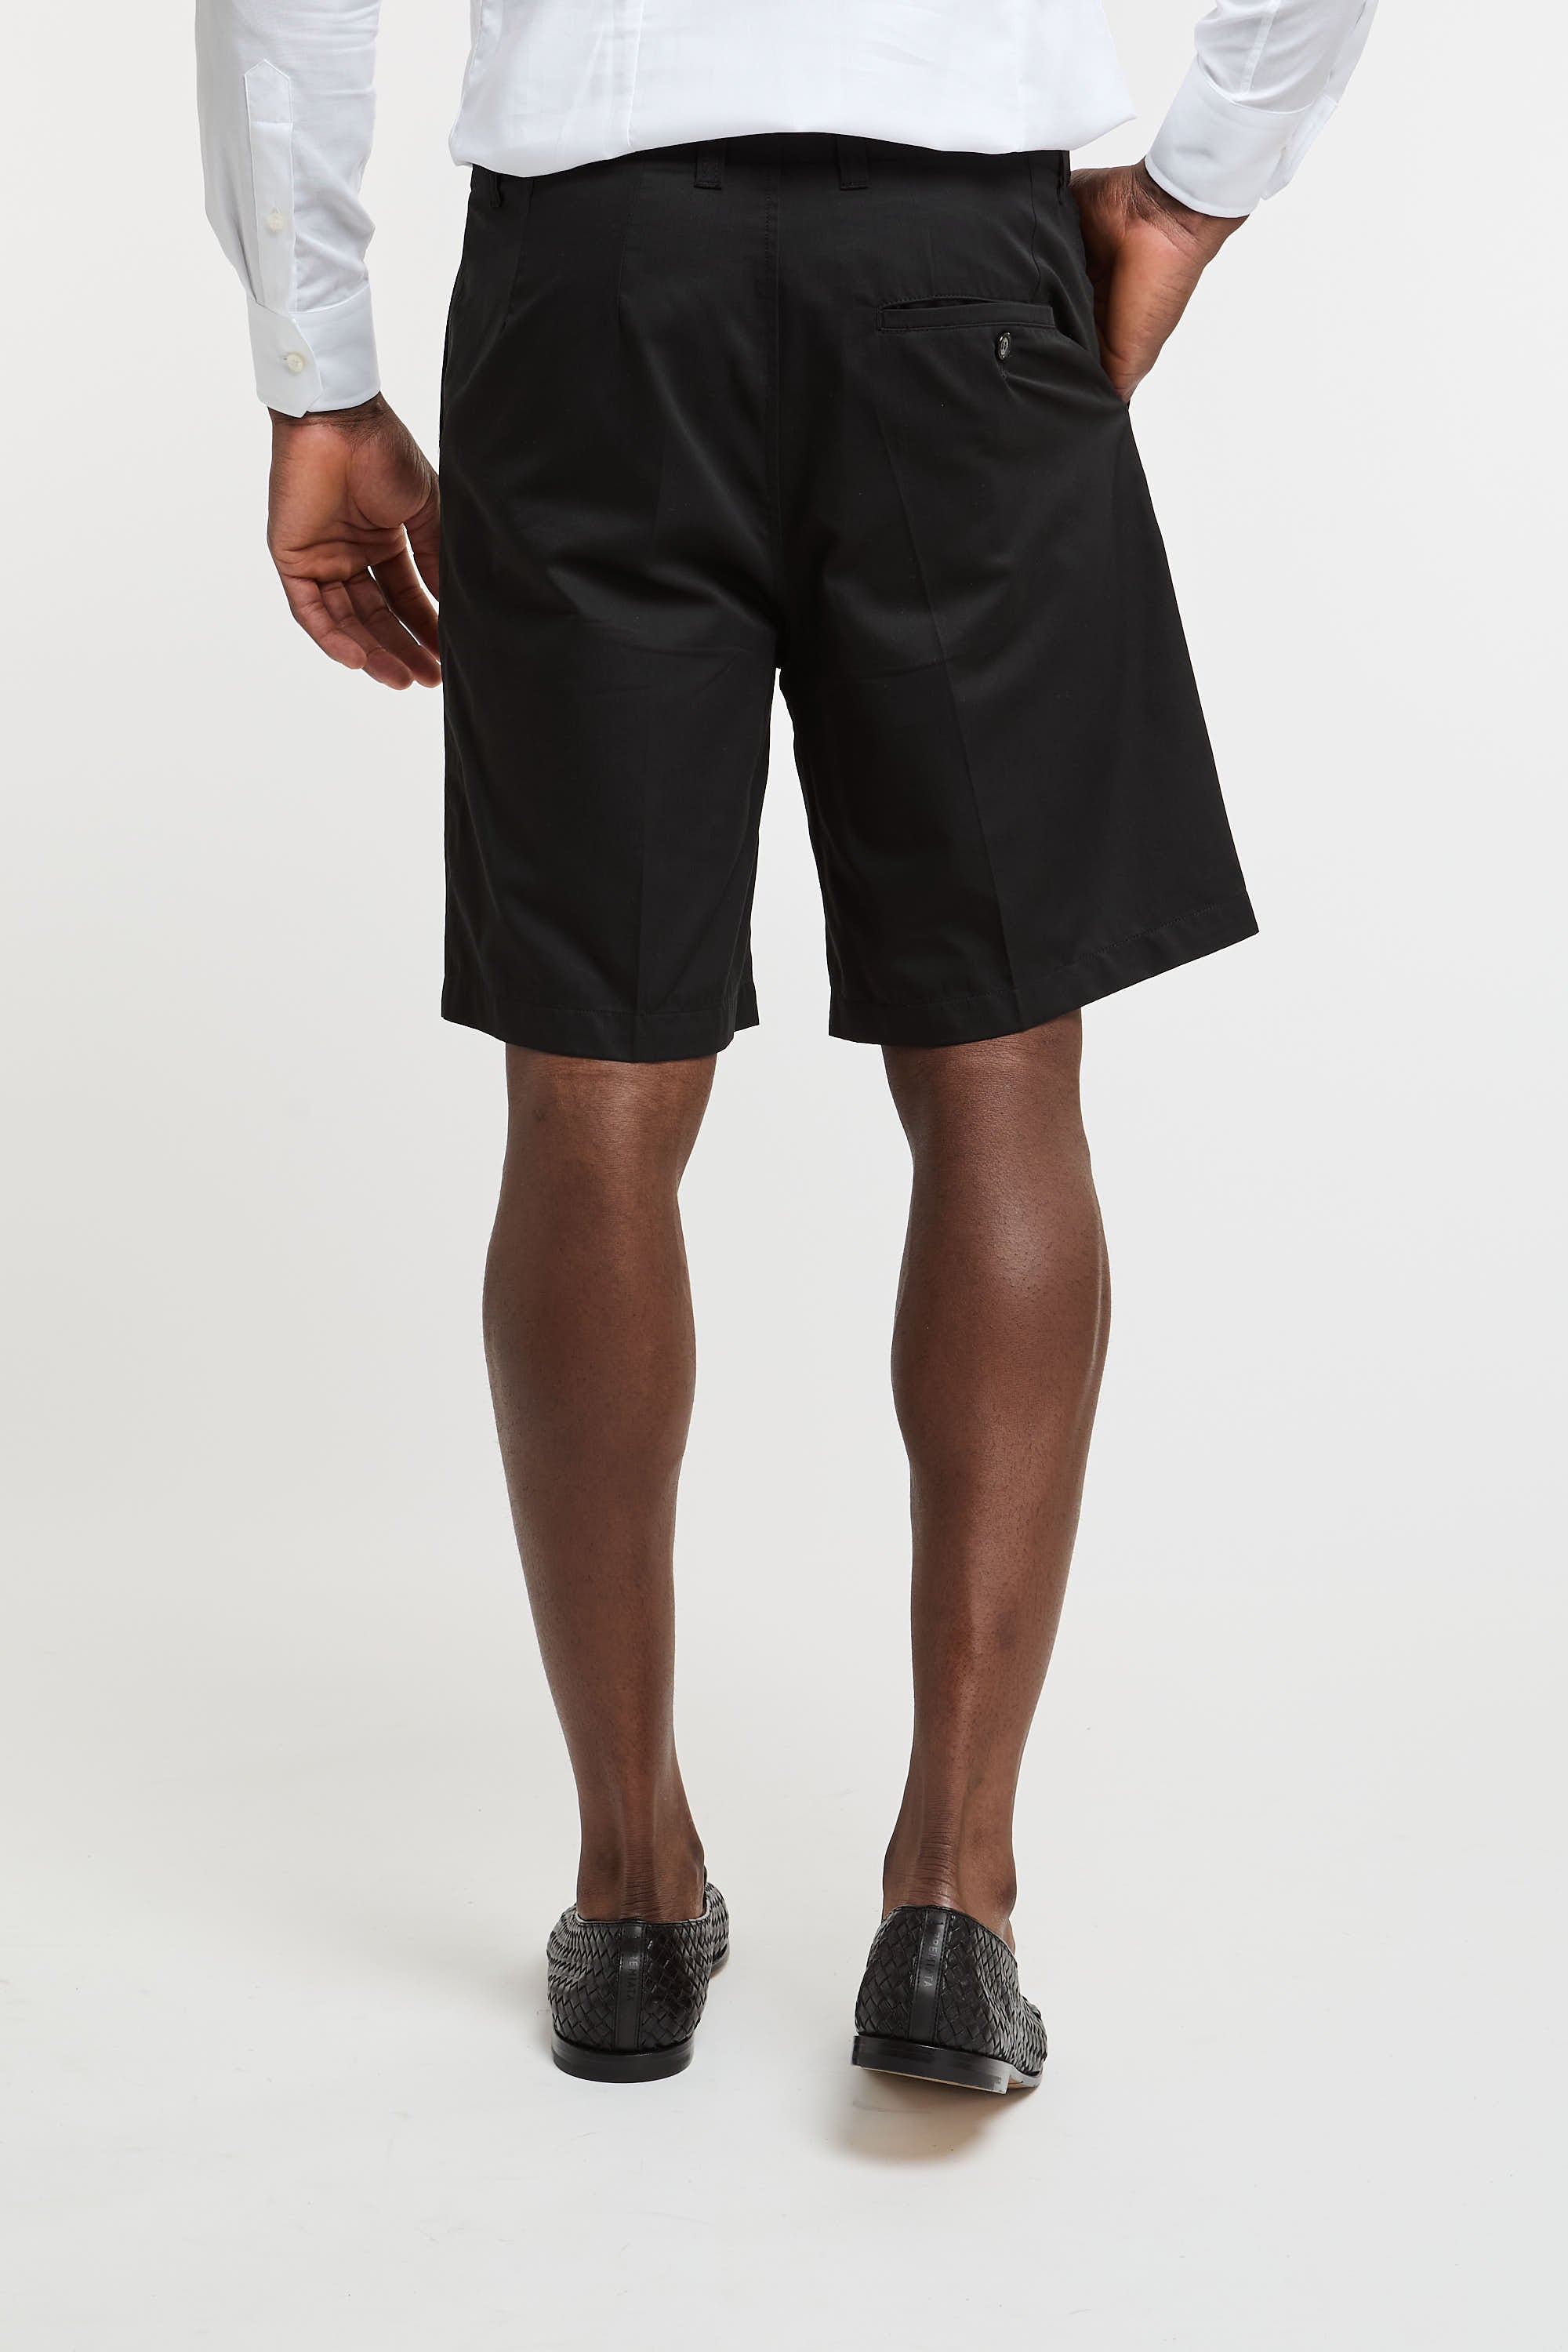 Paolo Pecora Black Cotton Blend Bermuda Shorts-6